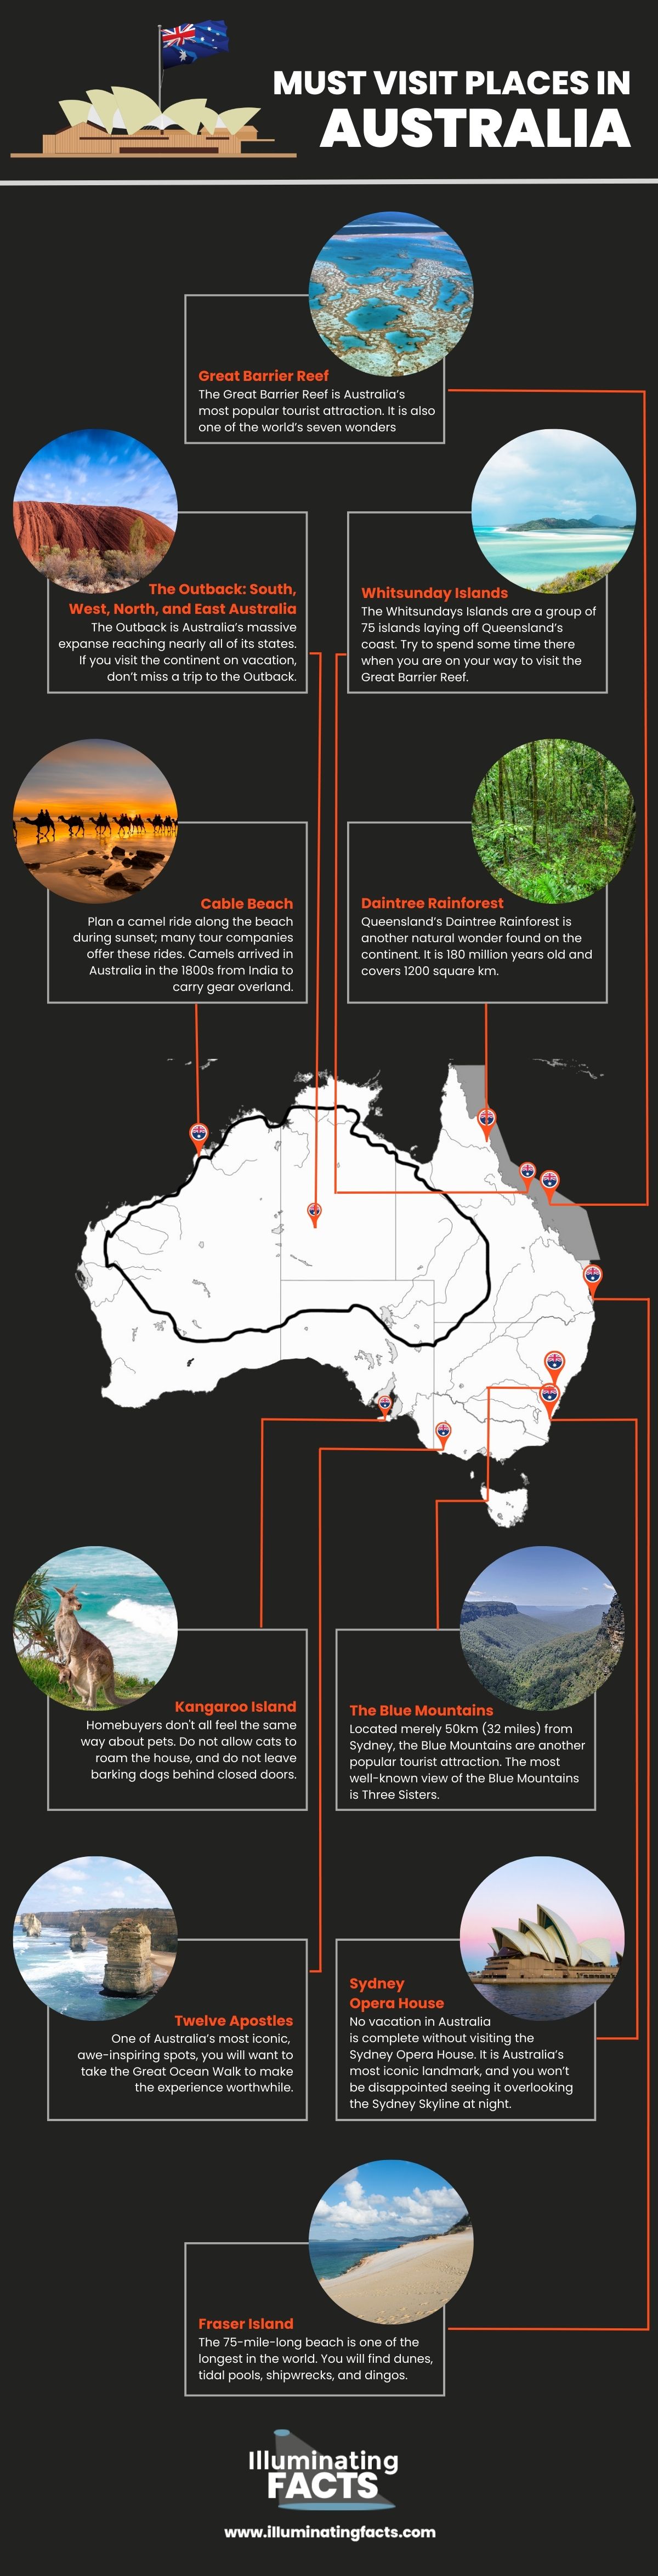 Must Visit Places in Australia